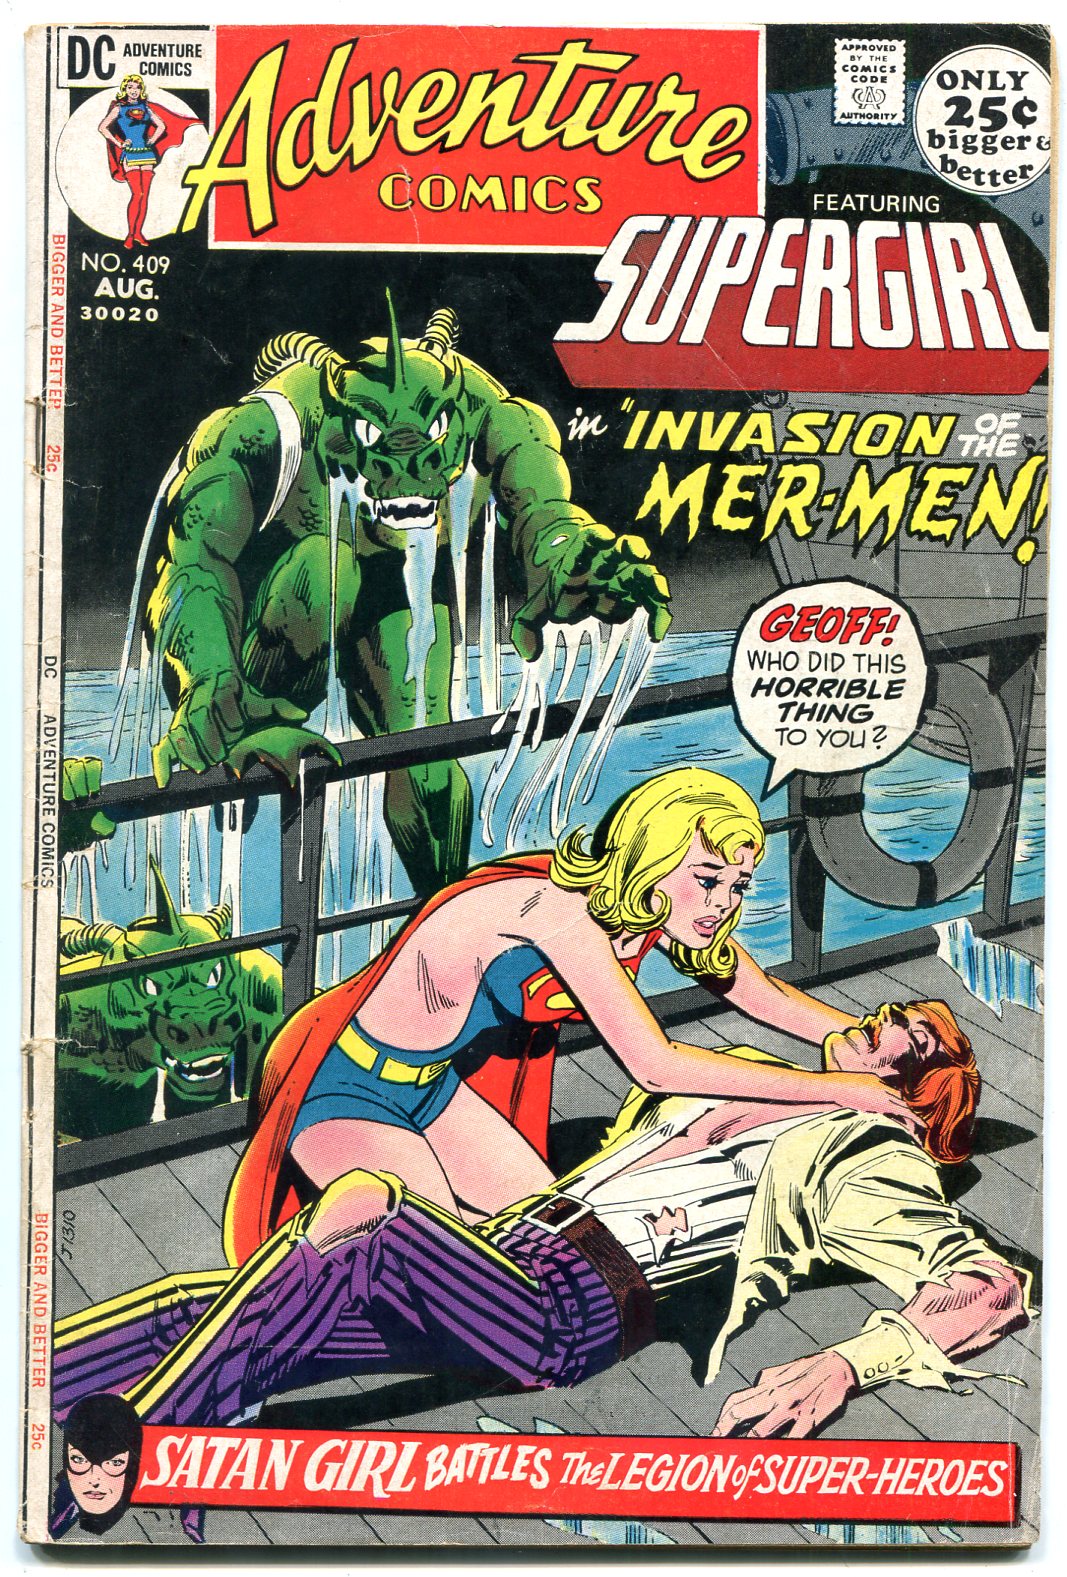 U Pick DC Silver Bronze ADVENTURE COMICS SUPERBOY SUPERGIRL LEGION SUPER-HEROES 